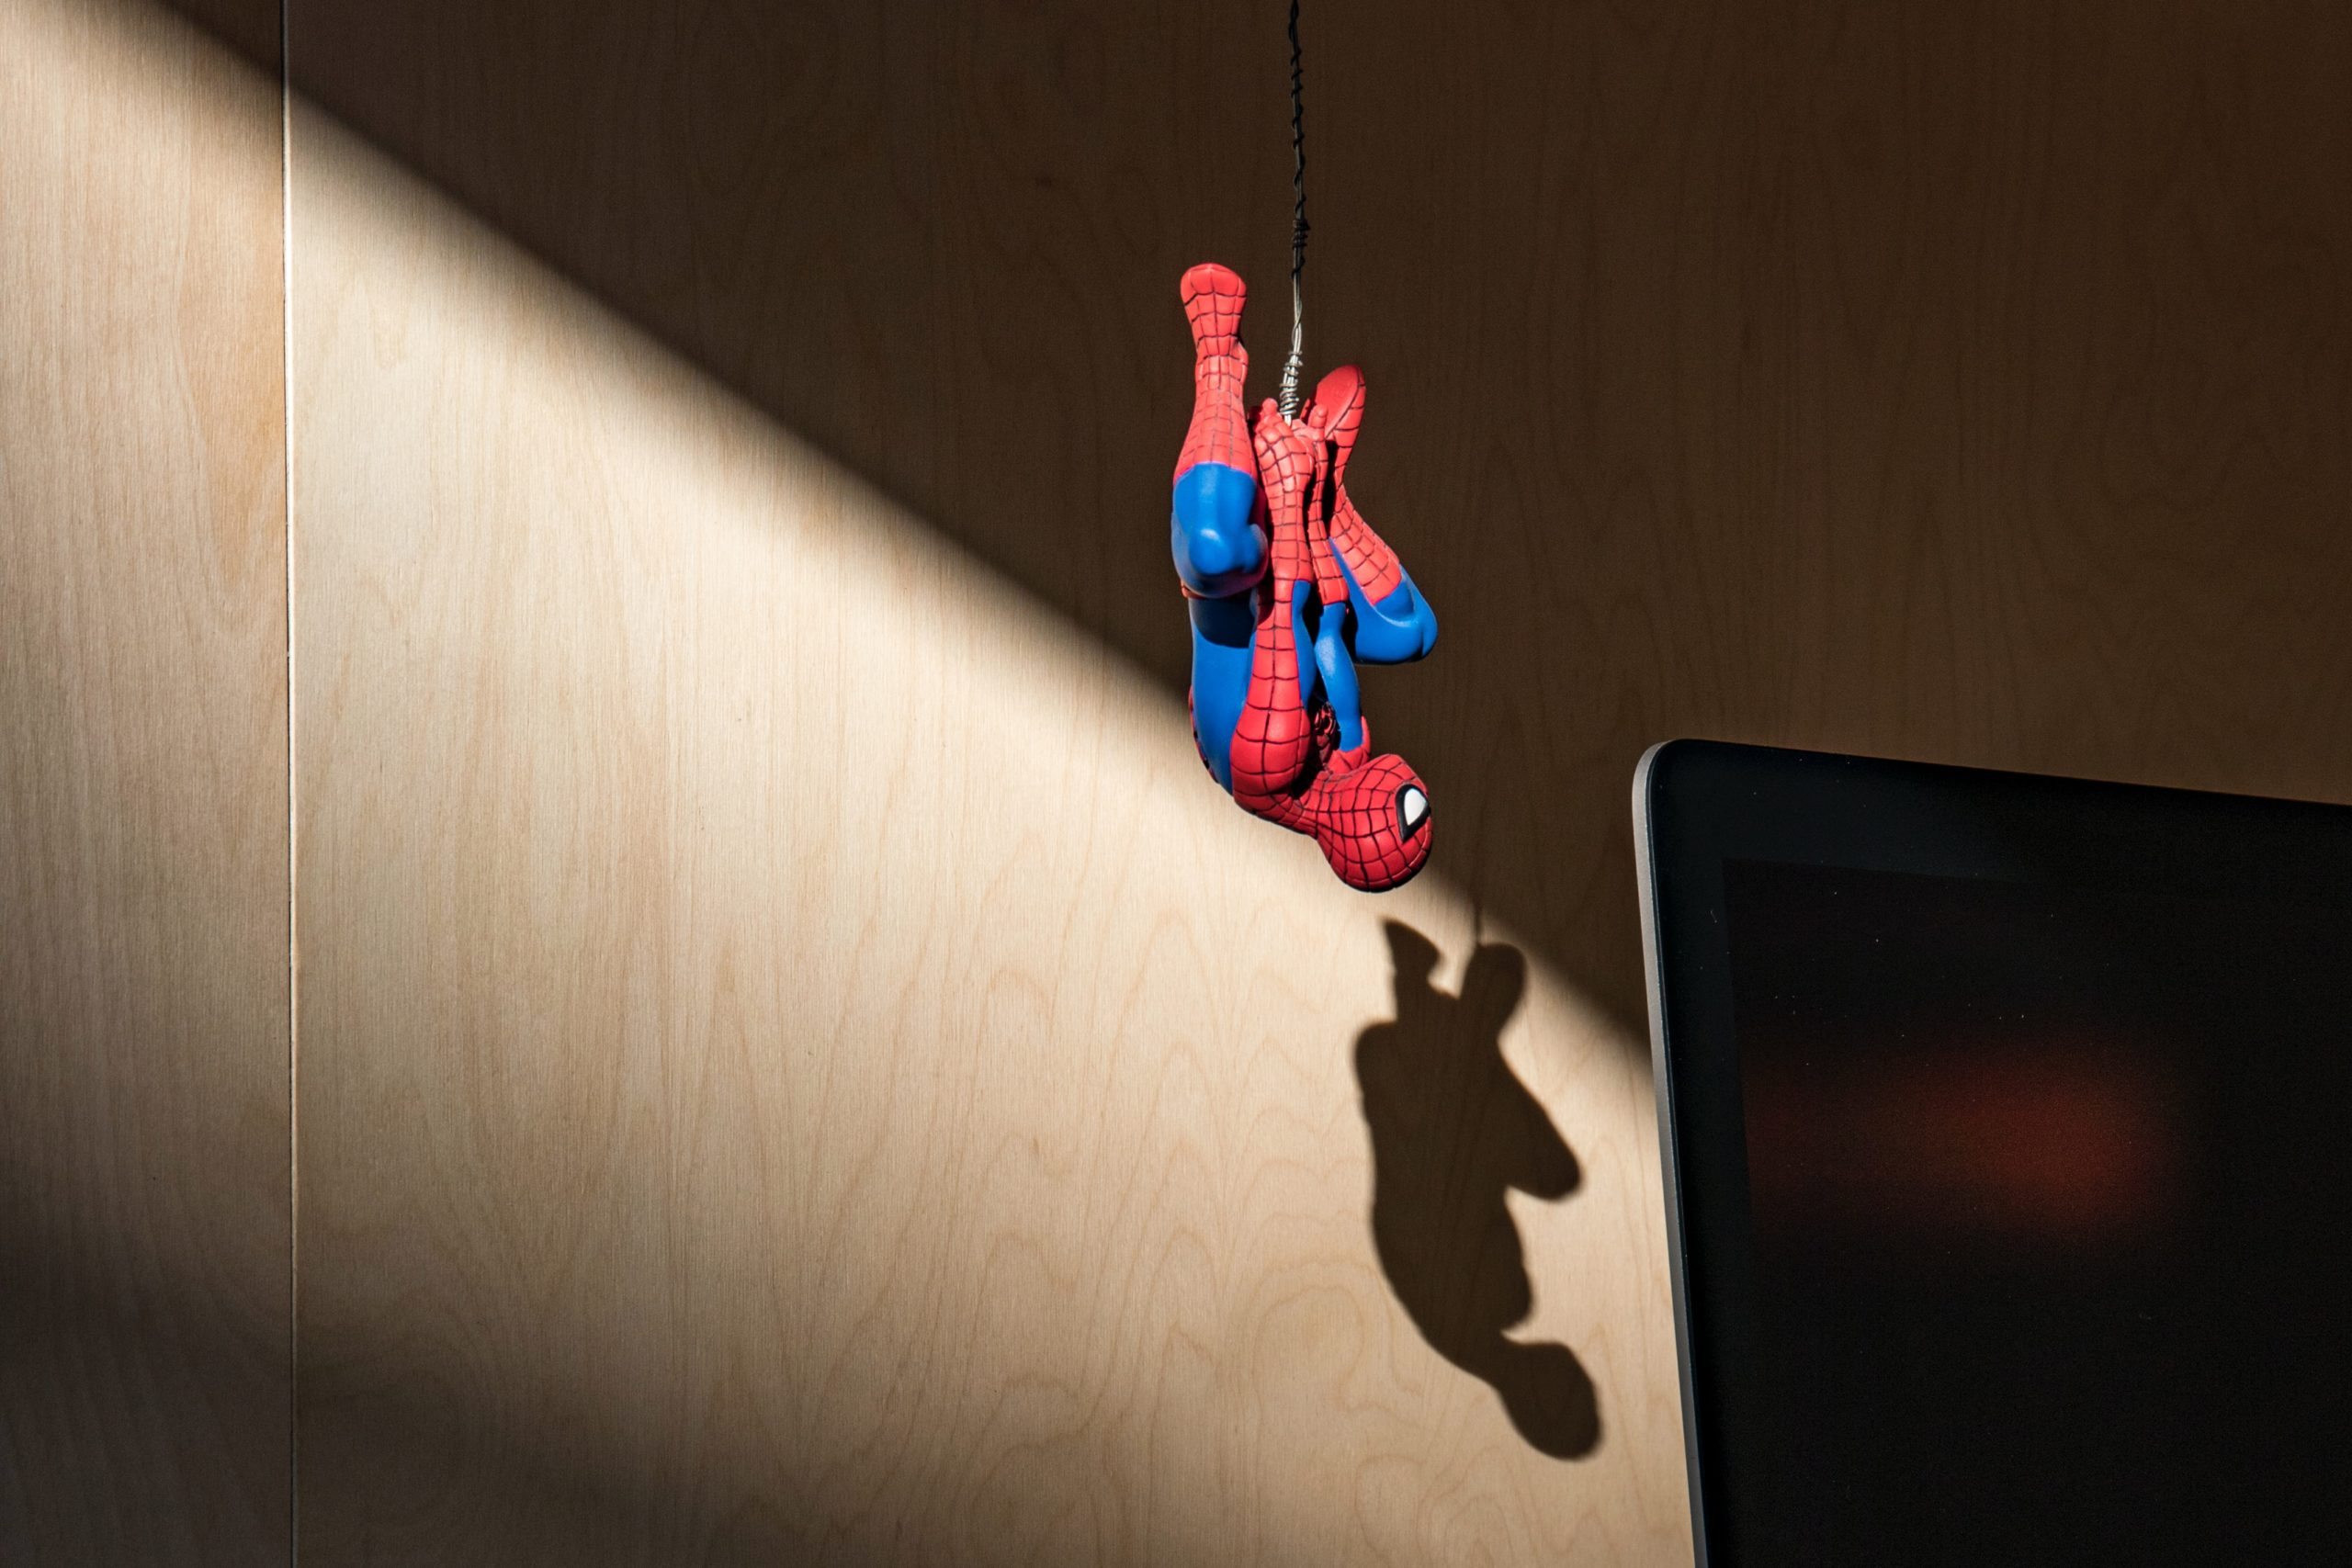 spiderman hanging upside down